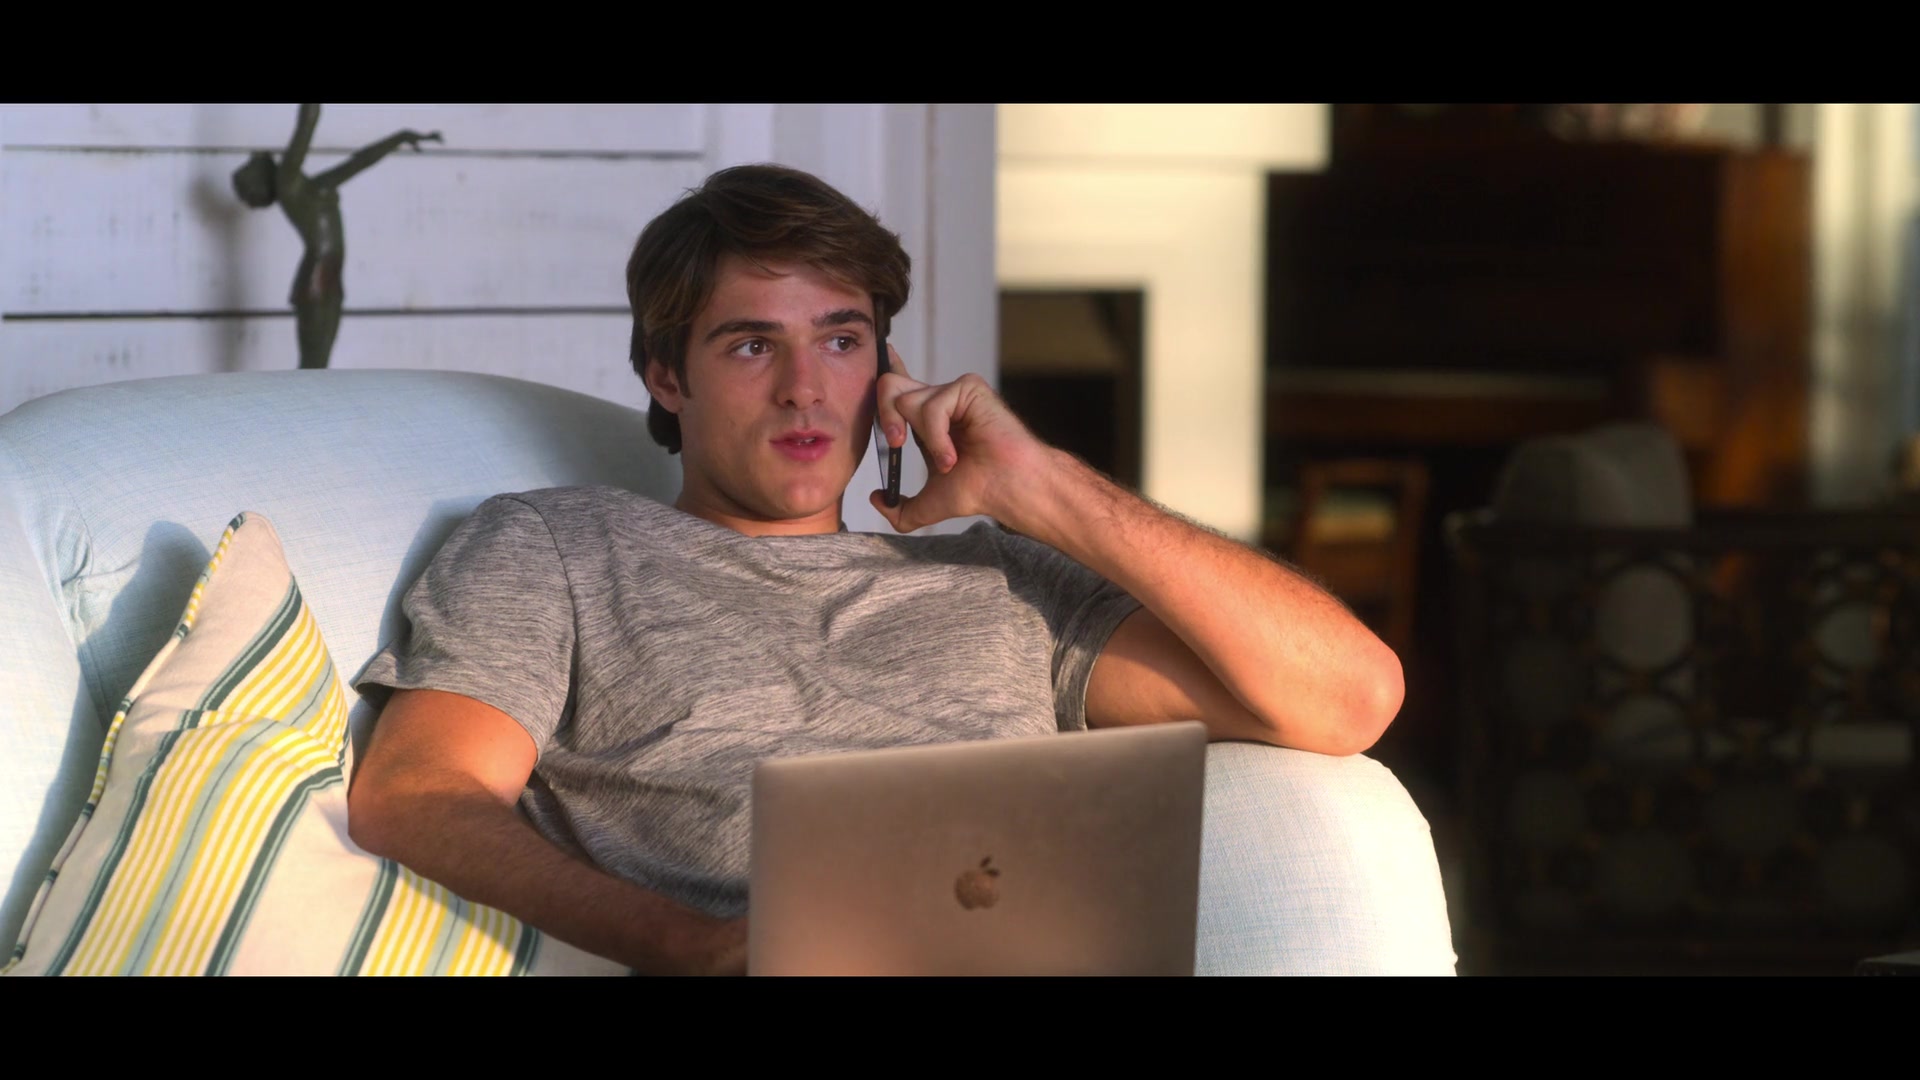 Apple Macbook Pro Laptop Of Actor Jacob Elordi As Noah Flynn In